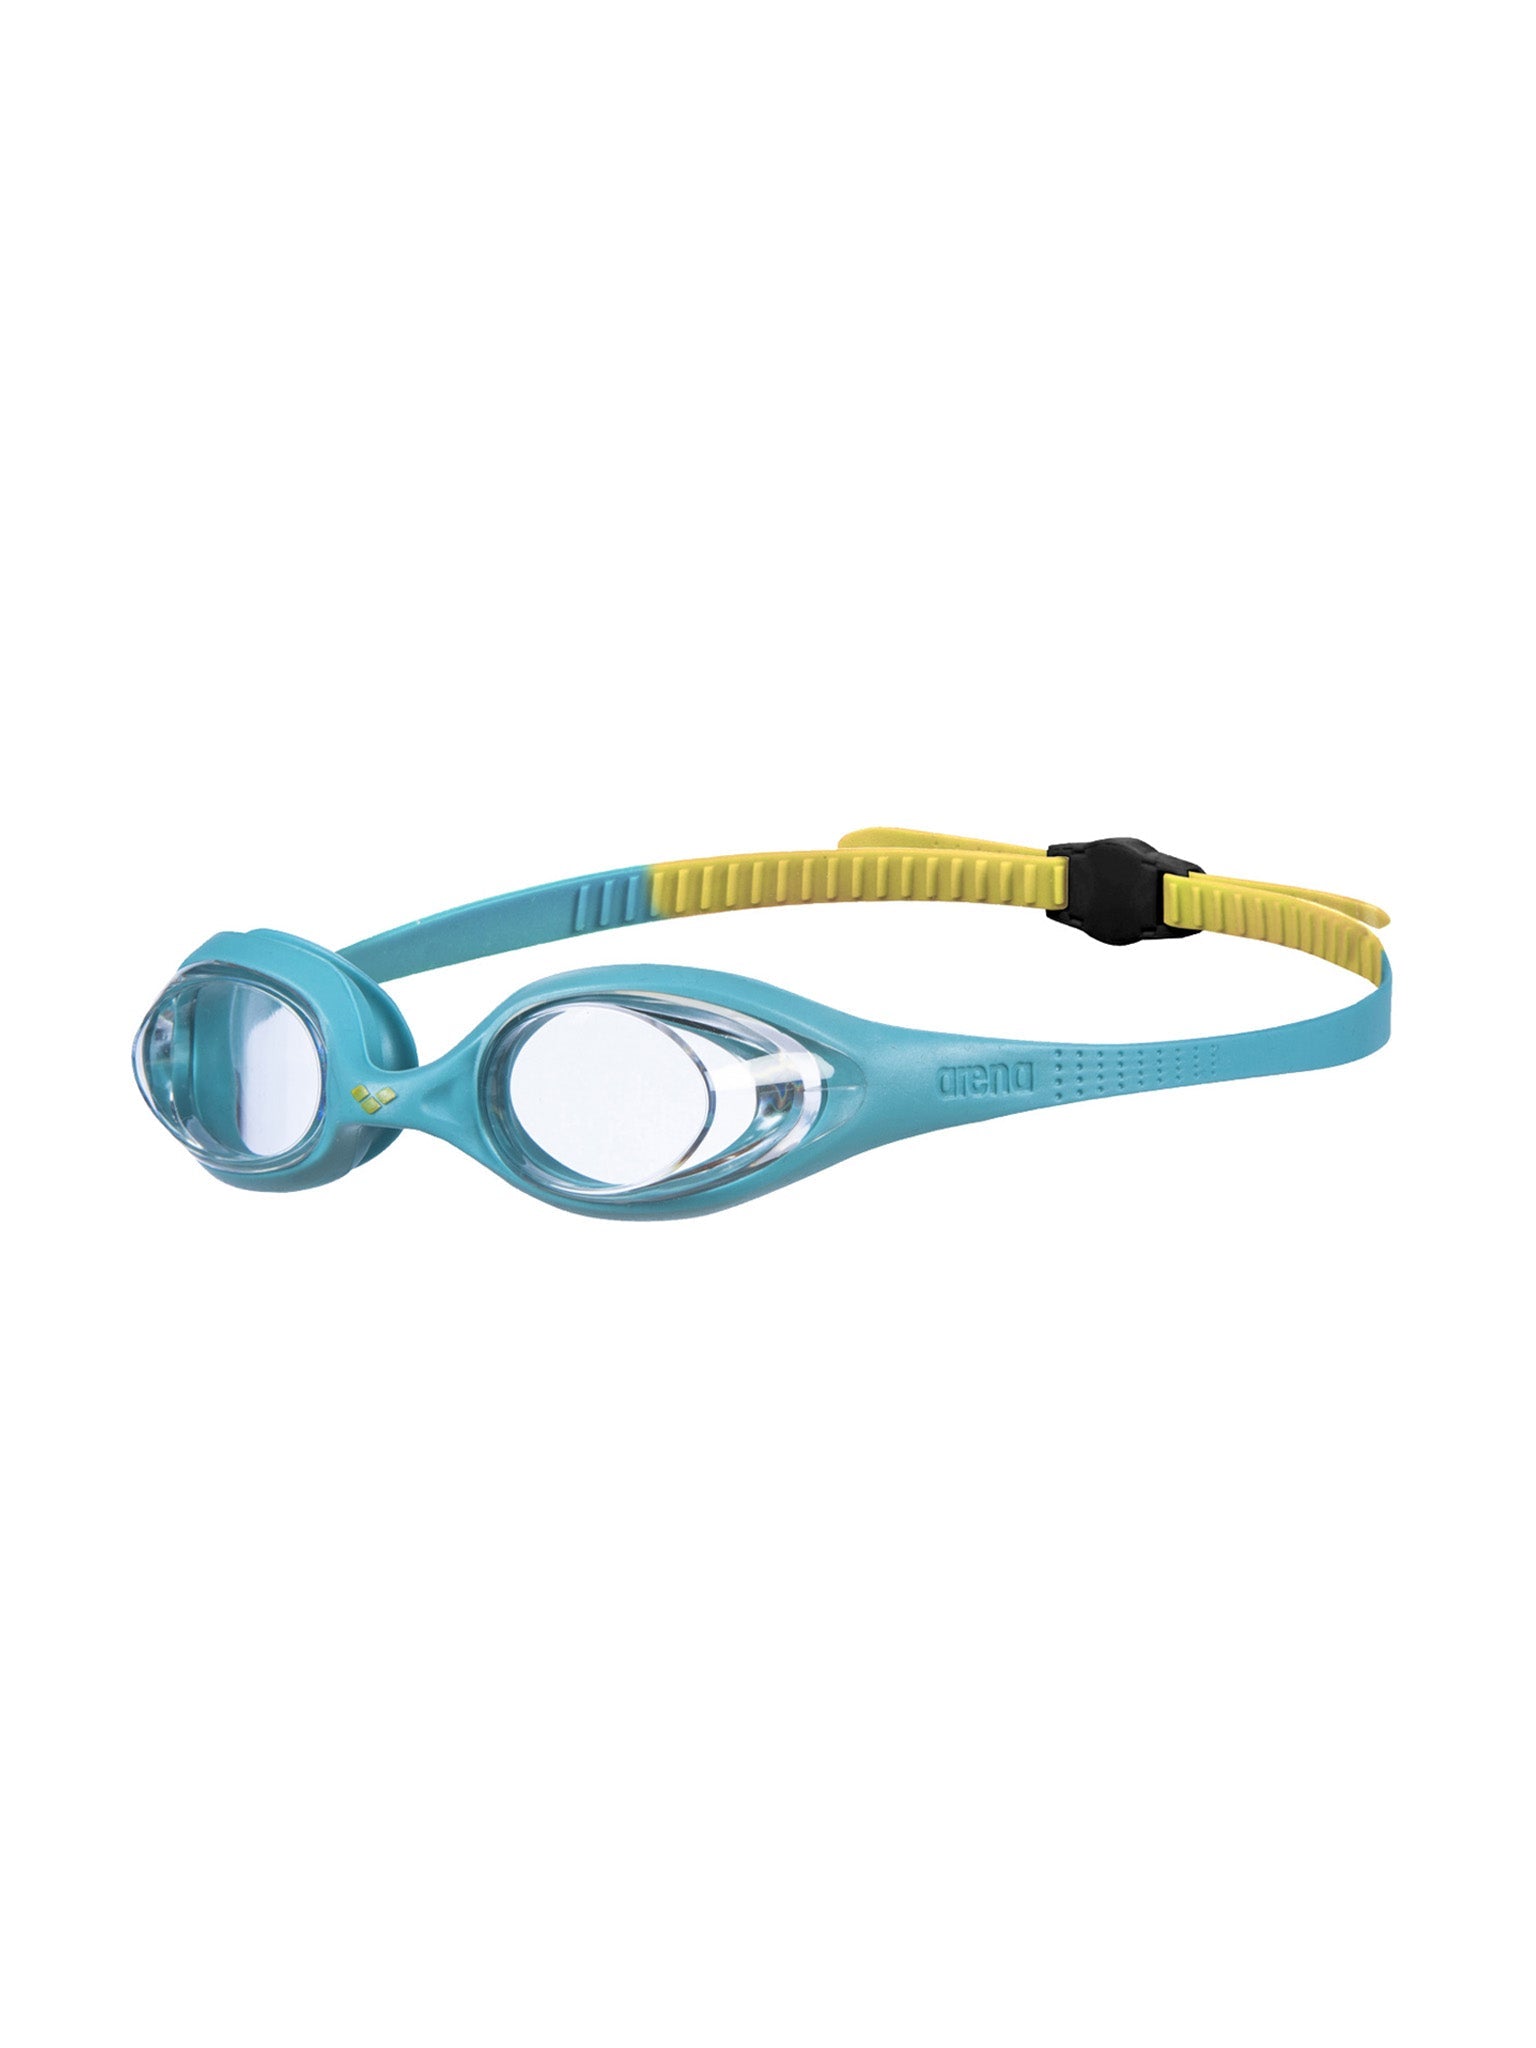 Junior Spider Swim Goggles - Blue/Yellow